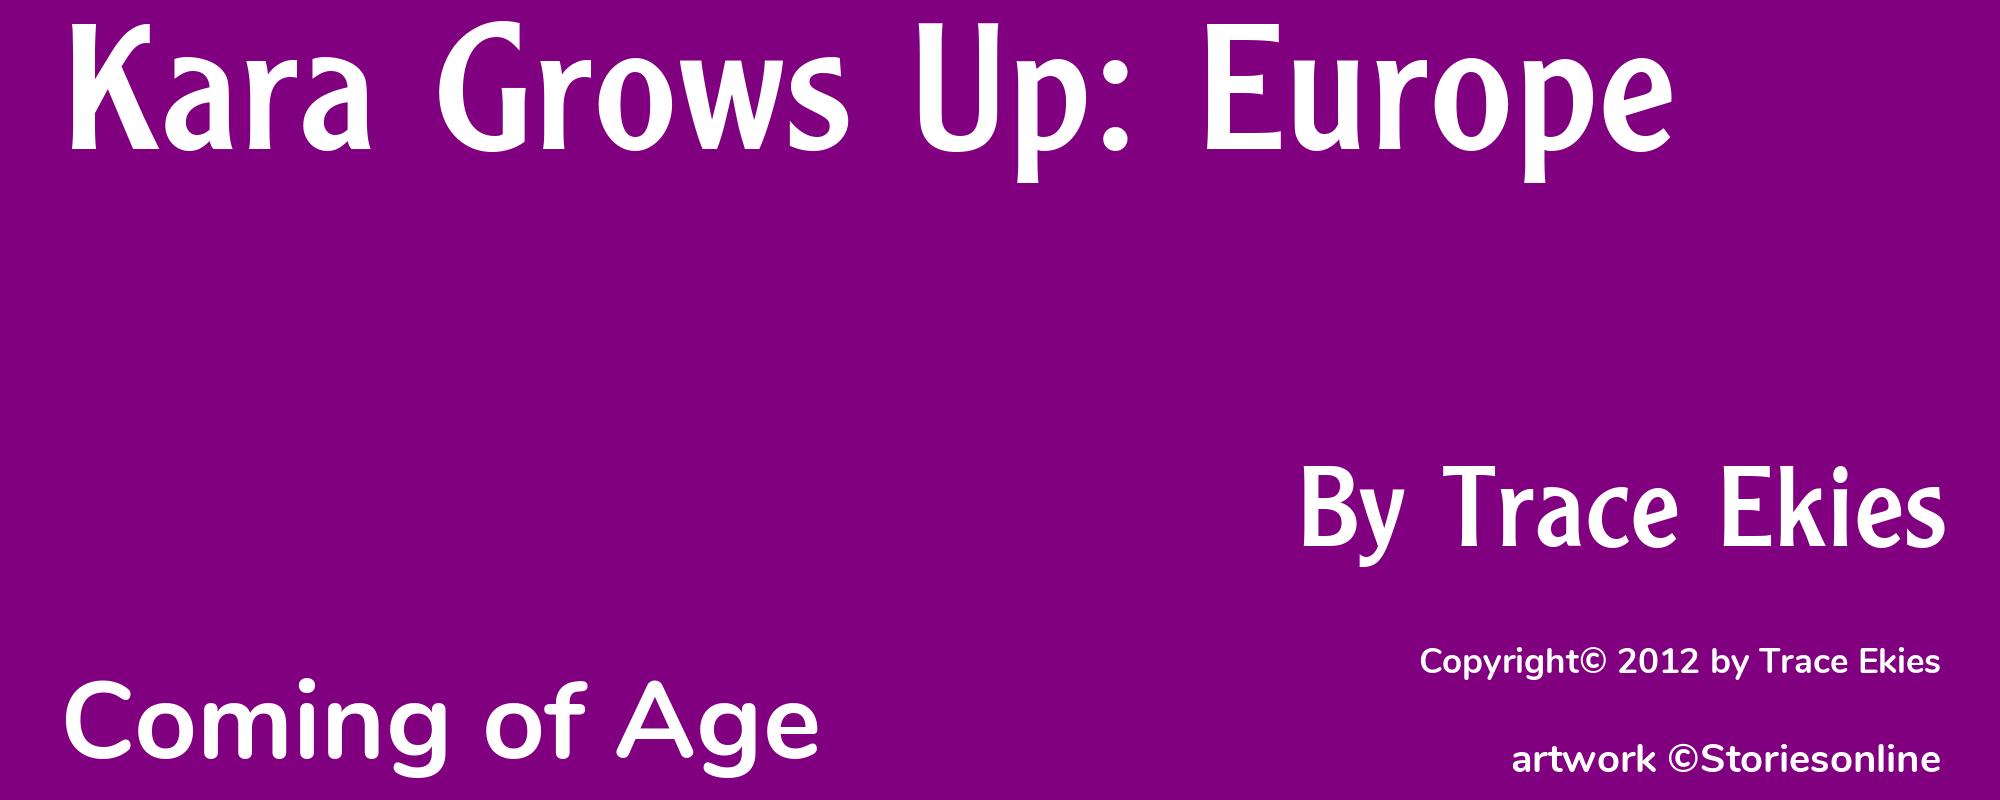 Kara Grows Up: Europe - Cover